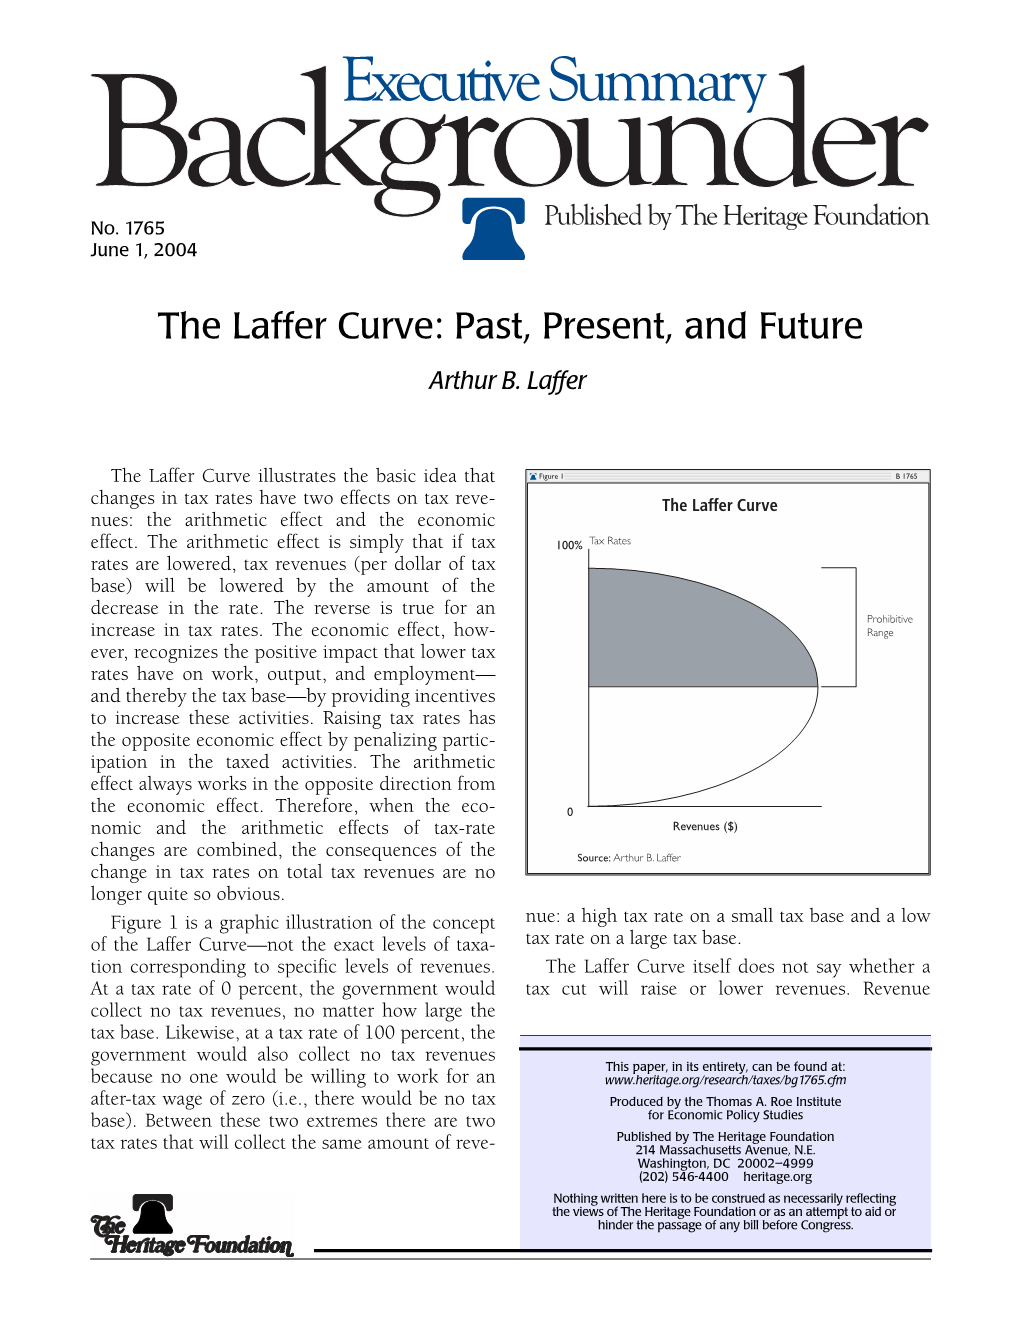 The Laffer Curve: Past, Present, and Future Arthur B